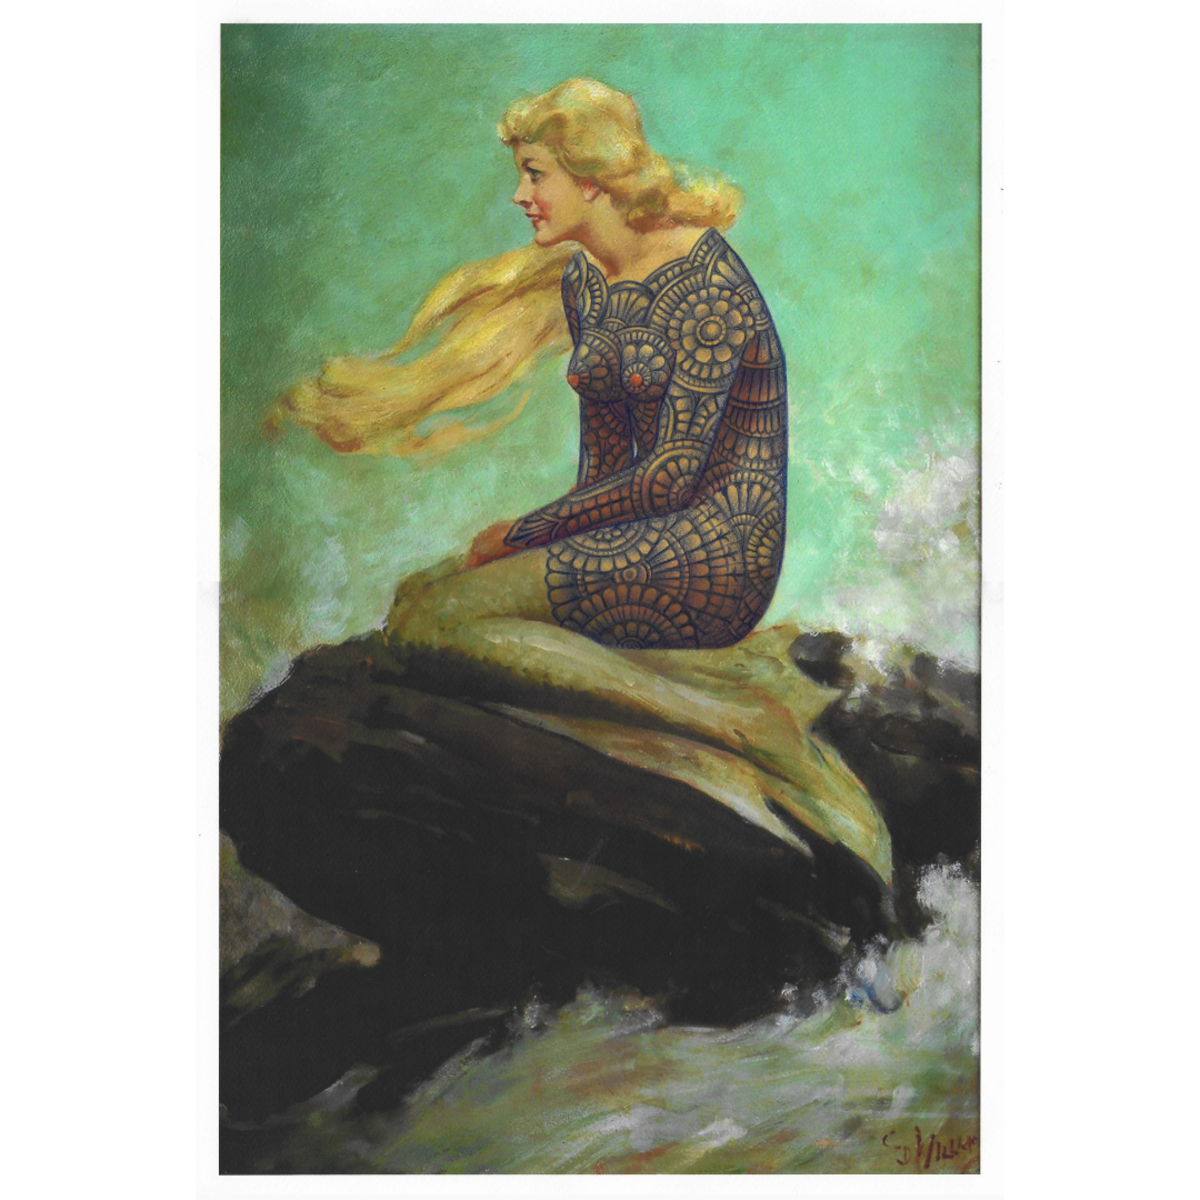 ramon-maiden-mermaid-memories-vi-galerie-dumas-linz